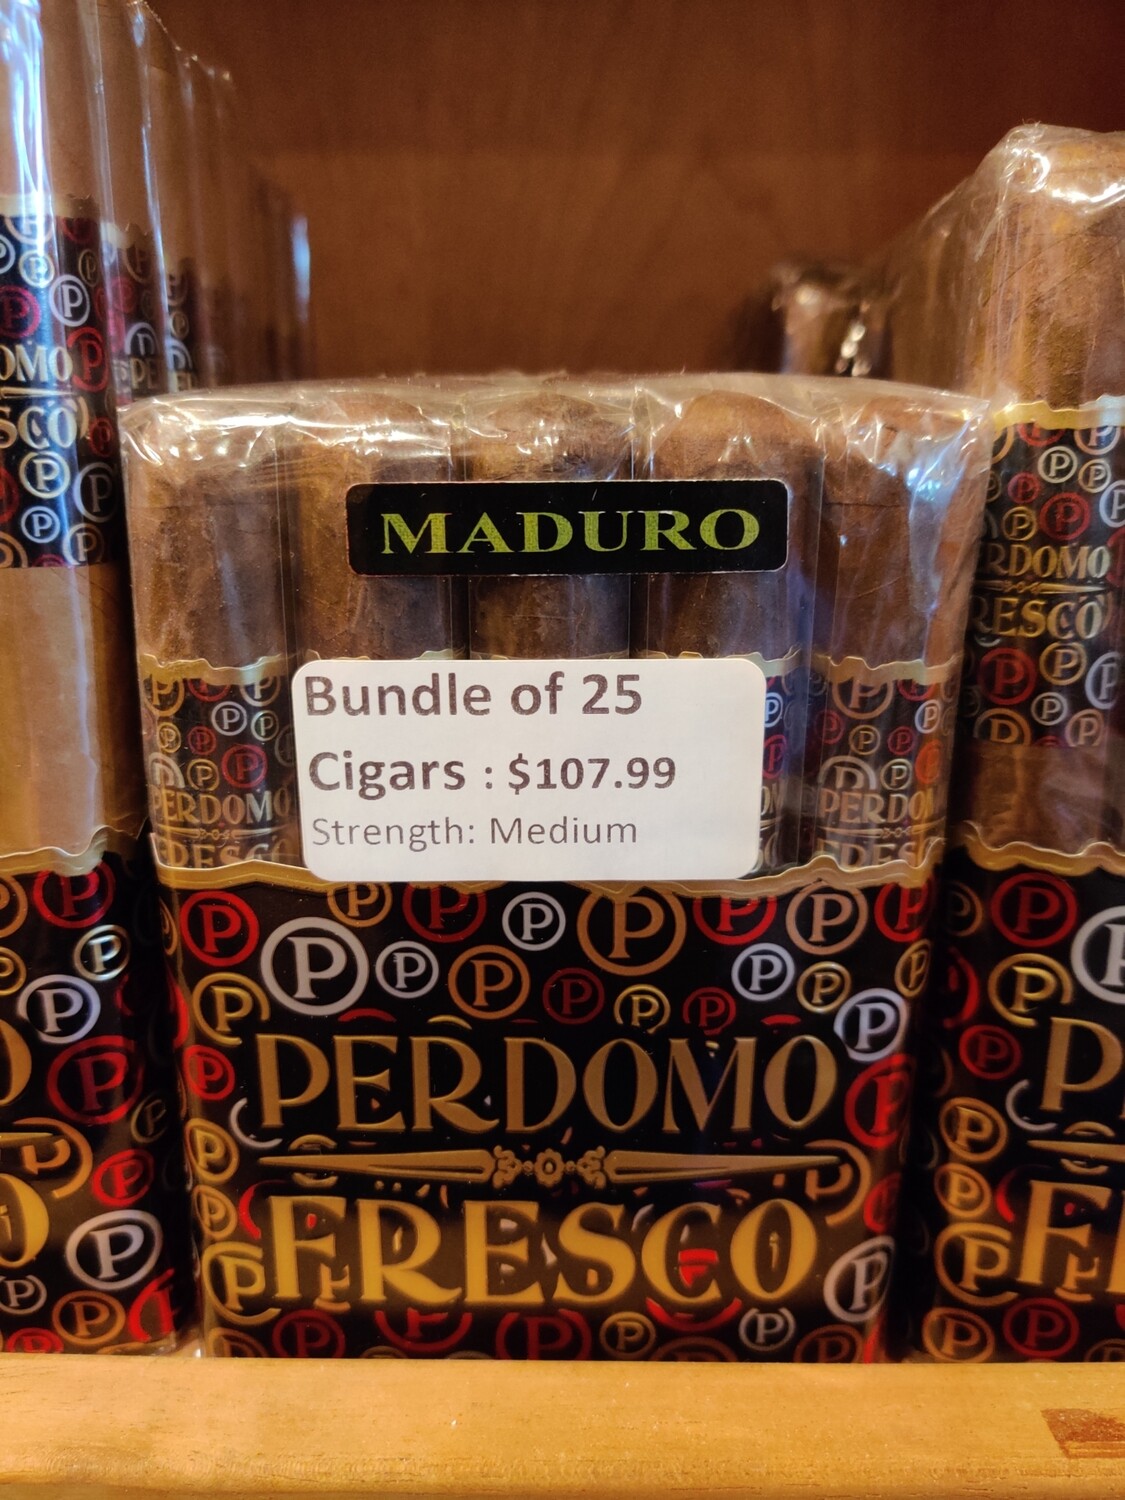 Perdomo Fresco Robusto Maduro 25 Cigar Bundle